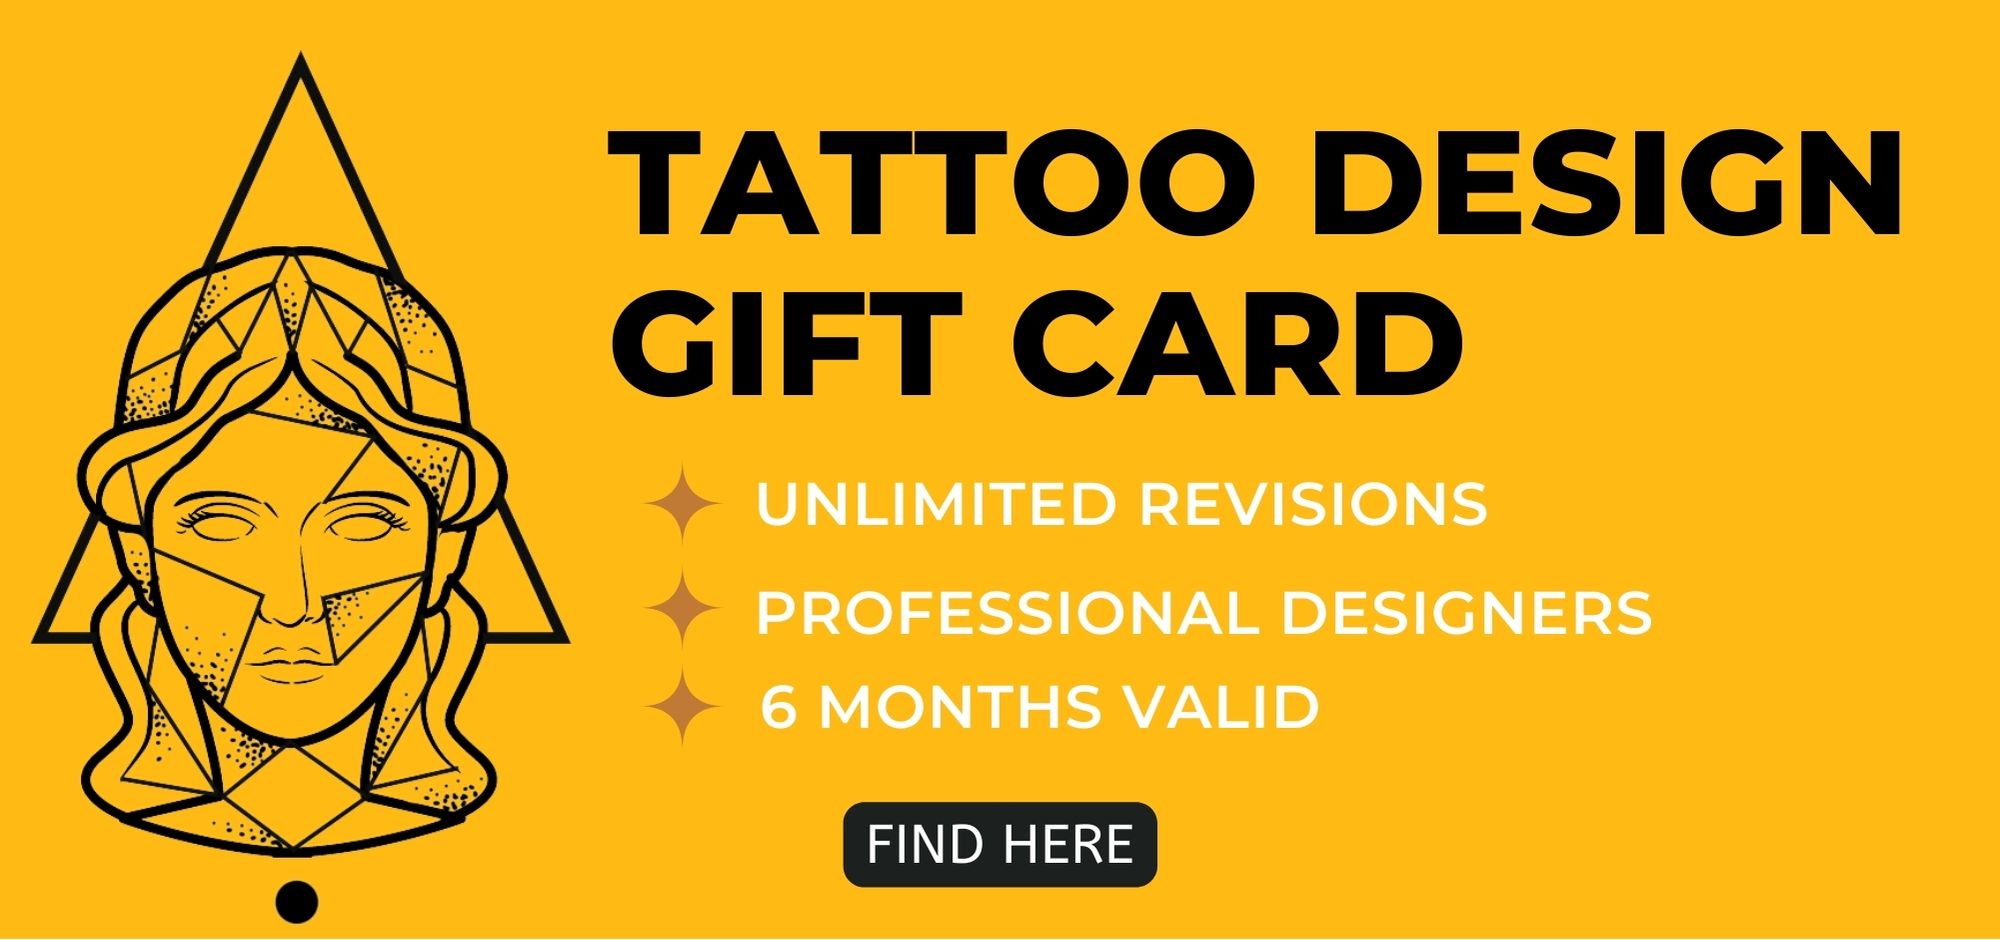 tattoo design gift card